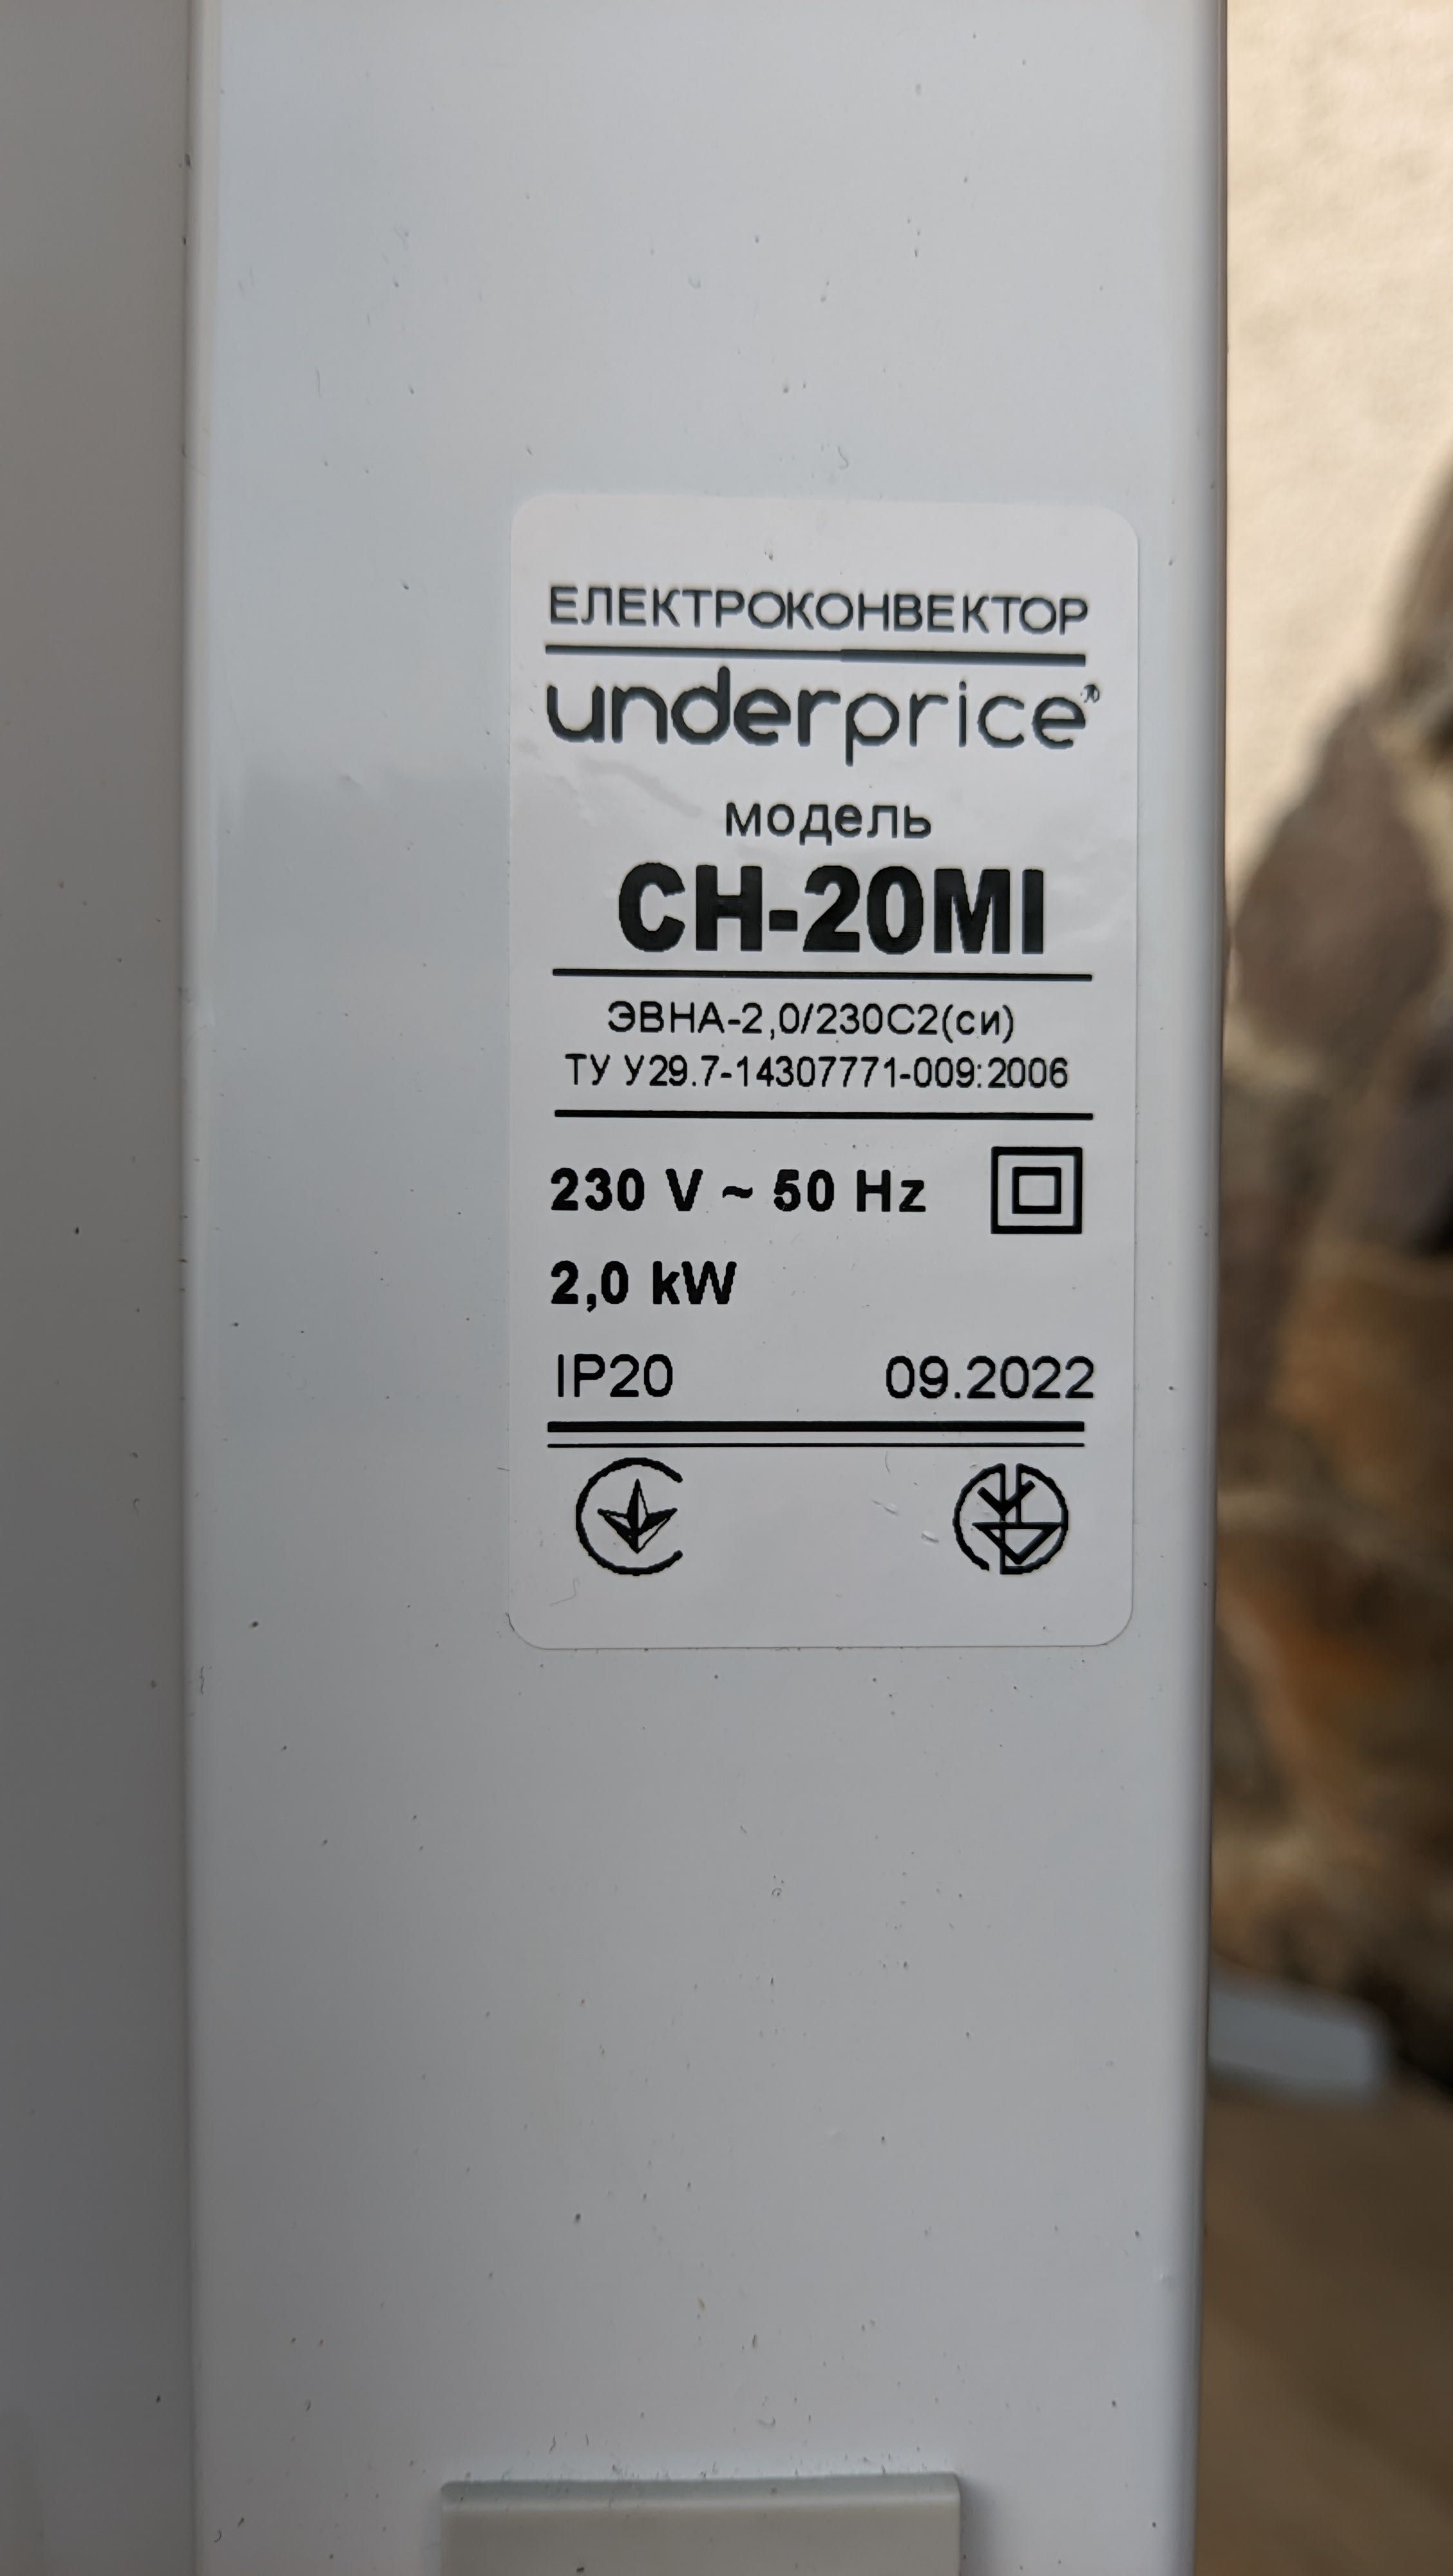 Електроконвектор UP CH-15MC/IPX4, UP CH-20MI майже нові